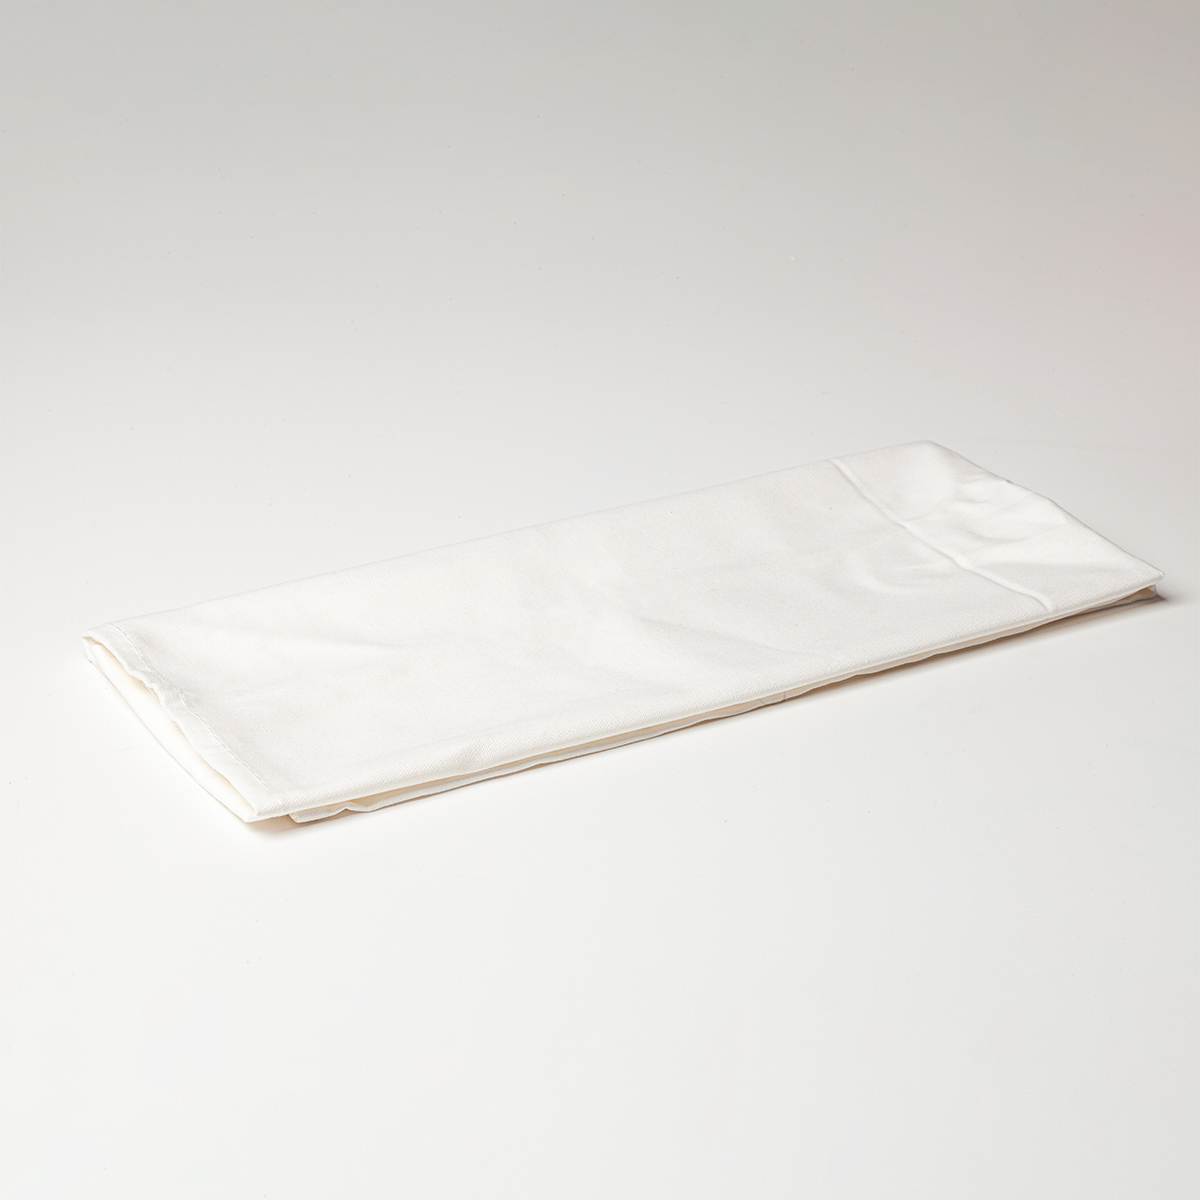 Image of Tea Towel #20 - Plain White